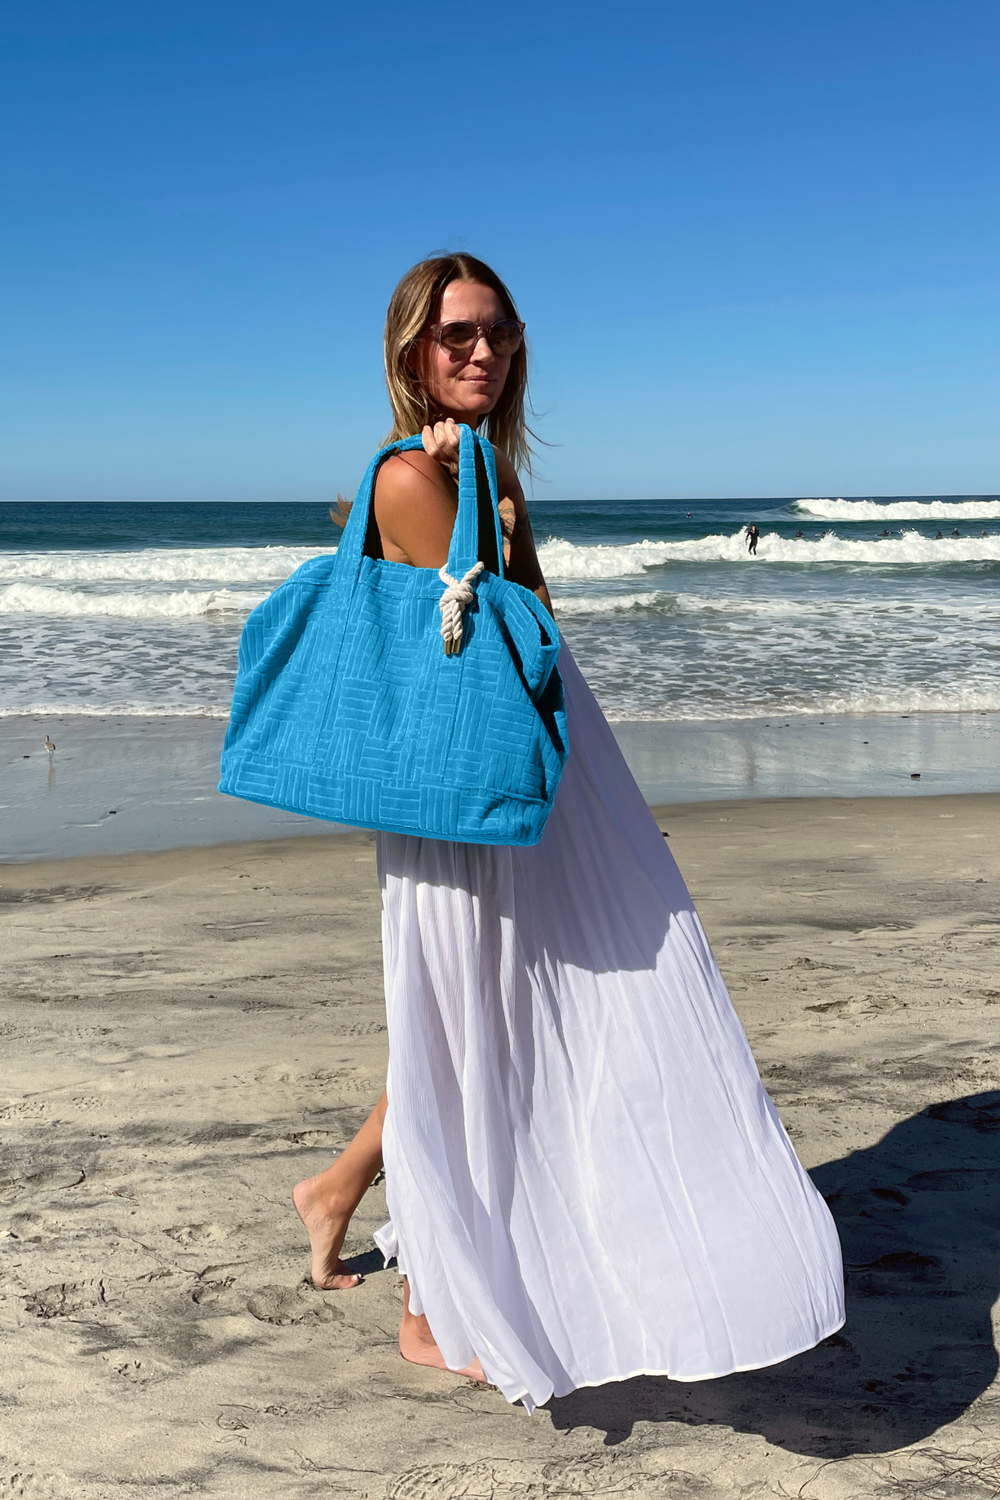 Bette_weekender set_woman on beach with blue beach bag tote